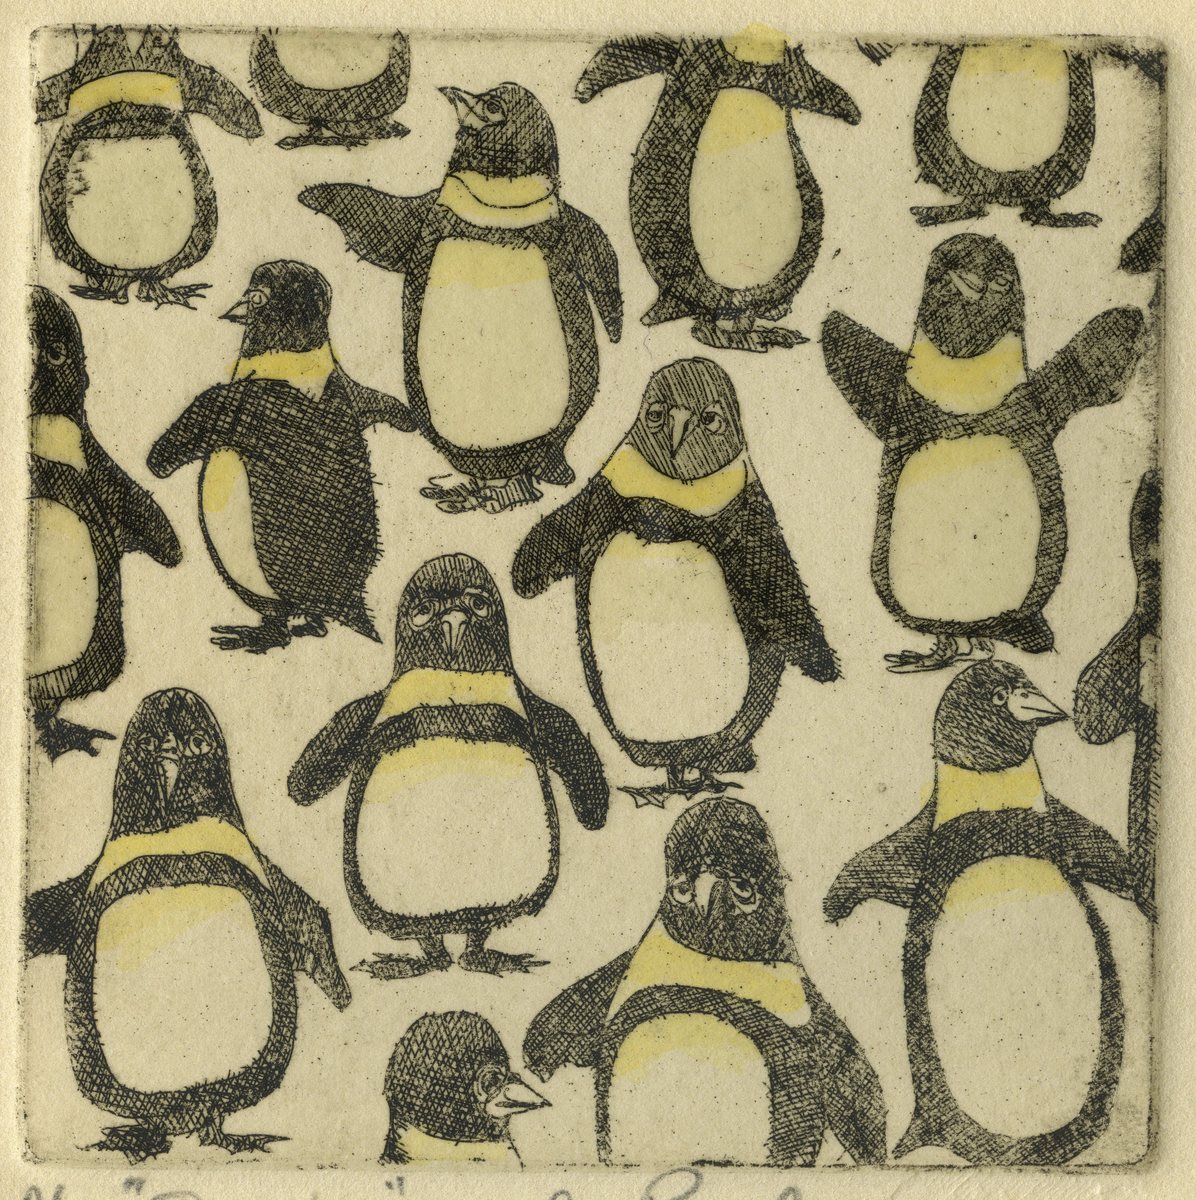 Congregated Creatures – Penguins